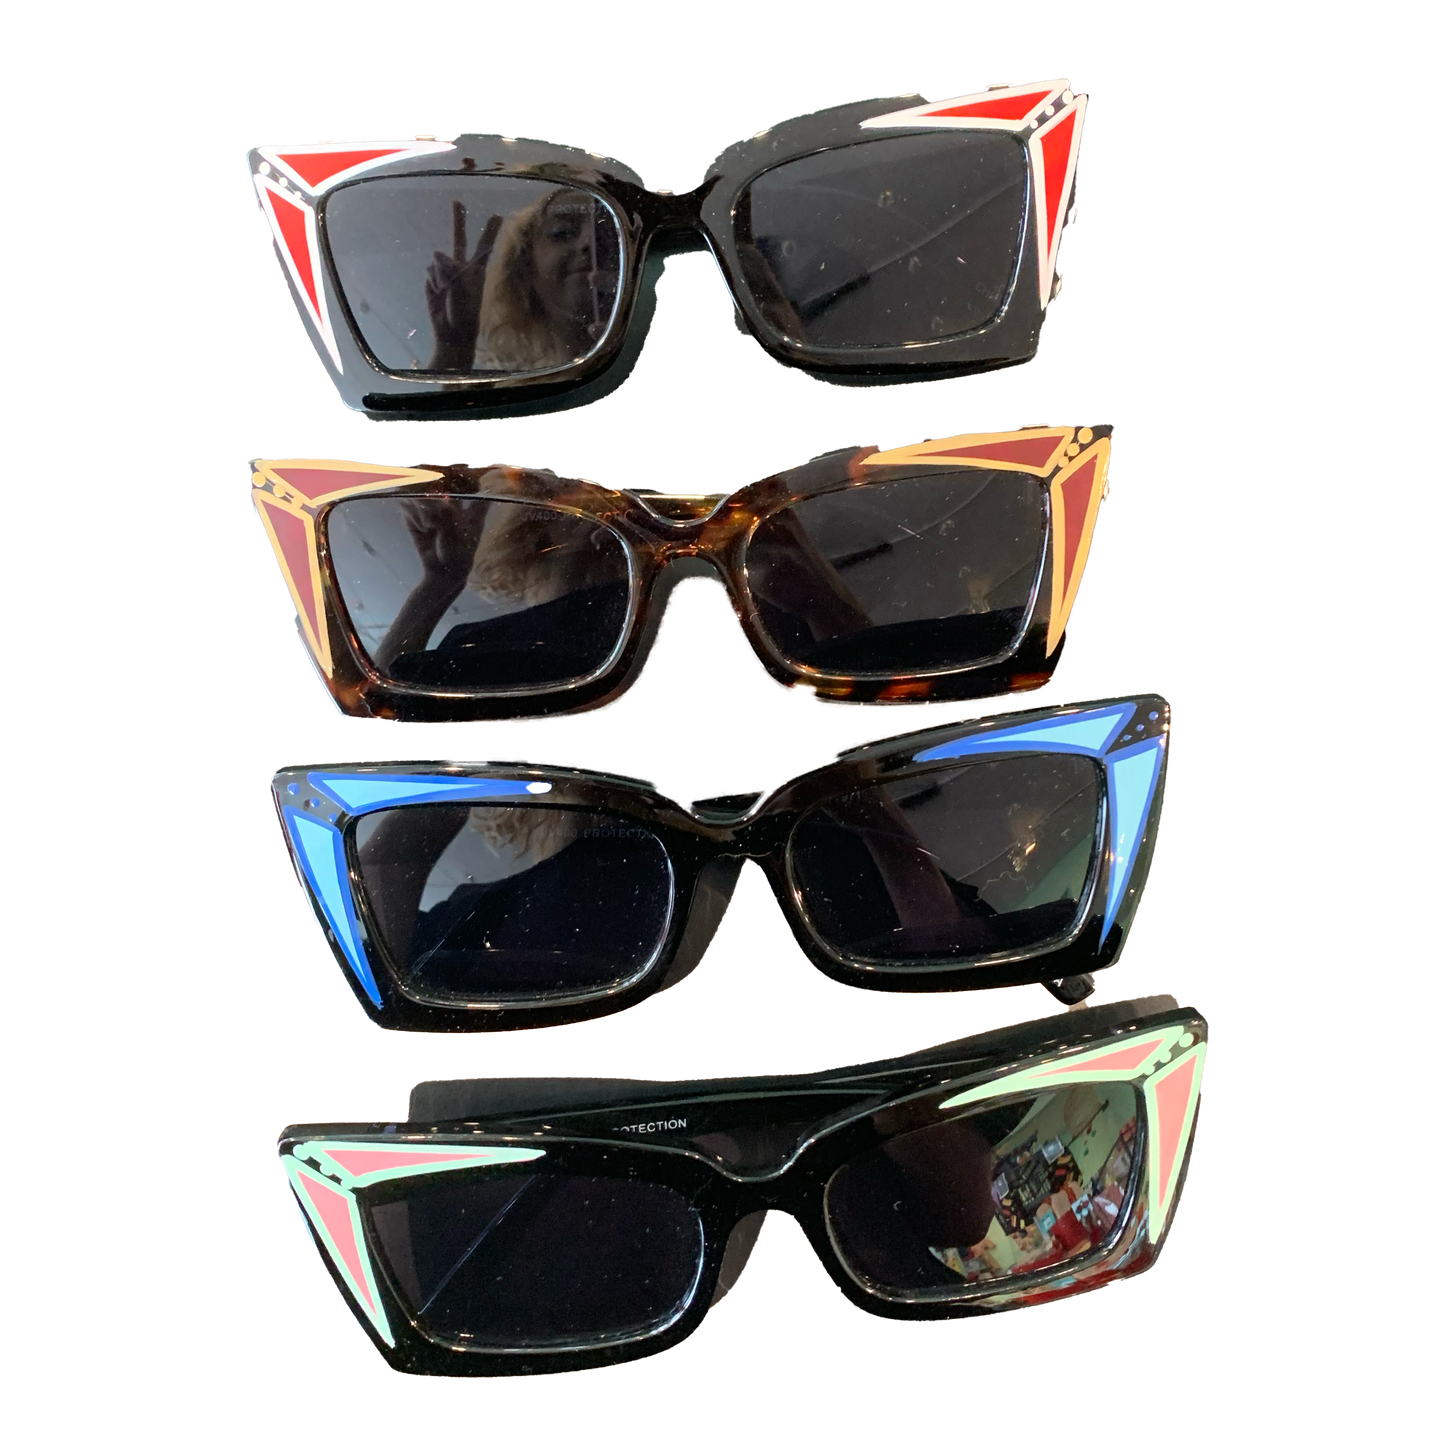 SD Buick Squared Sunglasses